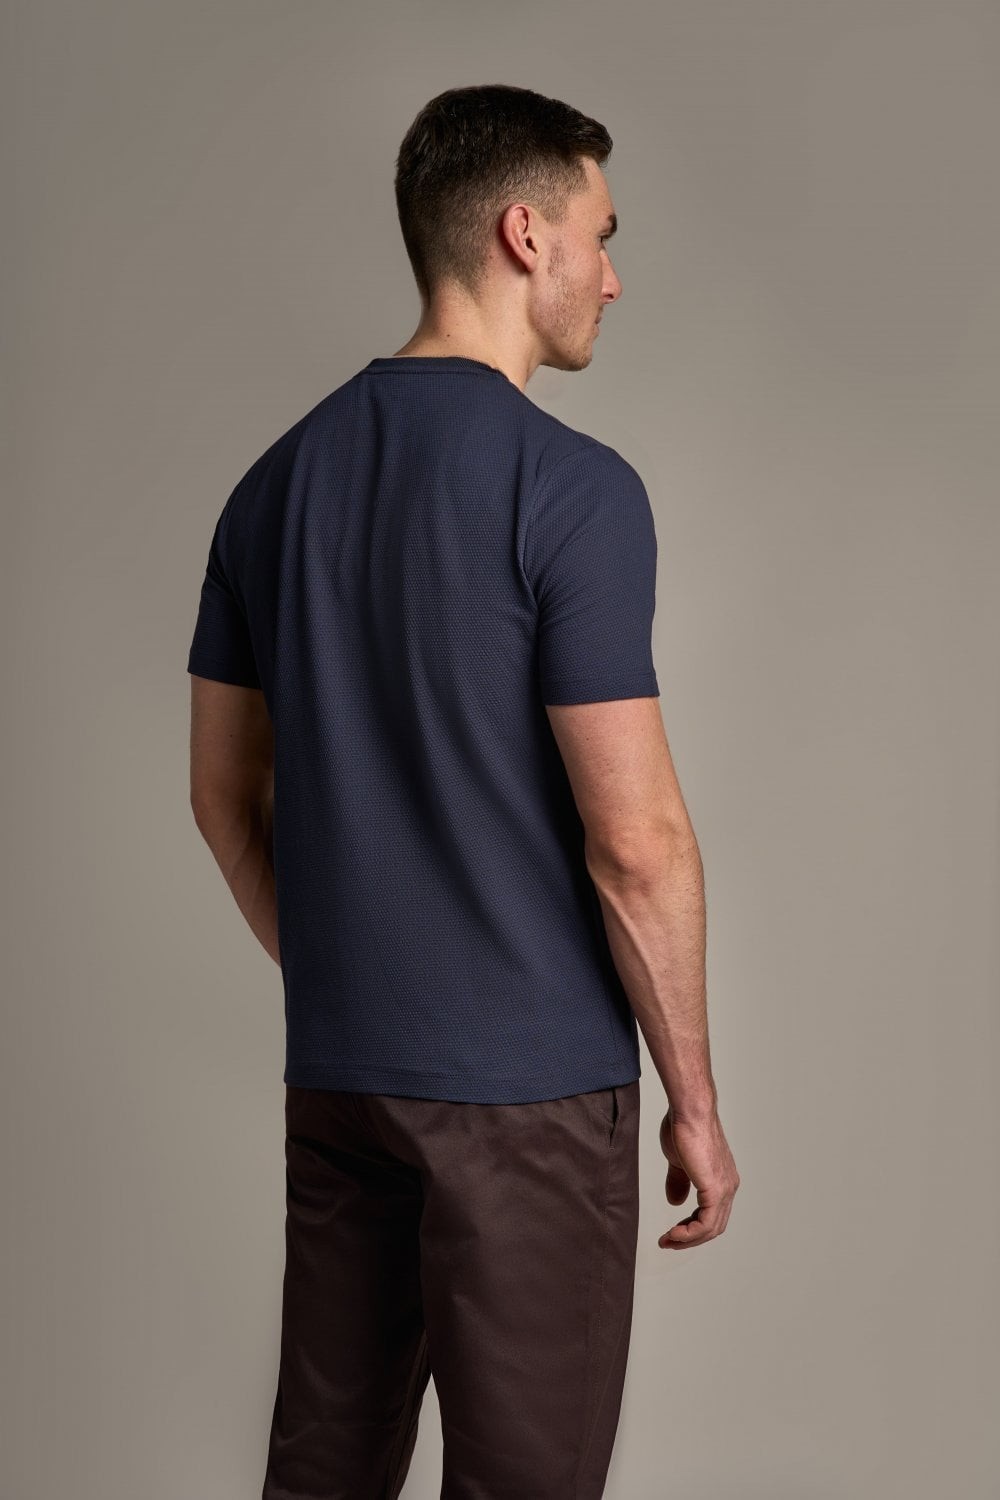 Herren Baumwoll-Slim-Fit T-Shirt - BYRON - Navy blau